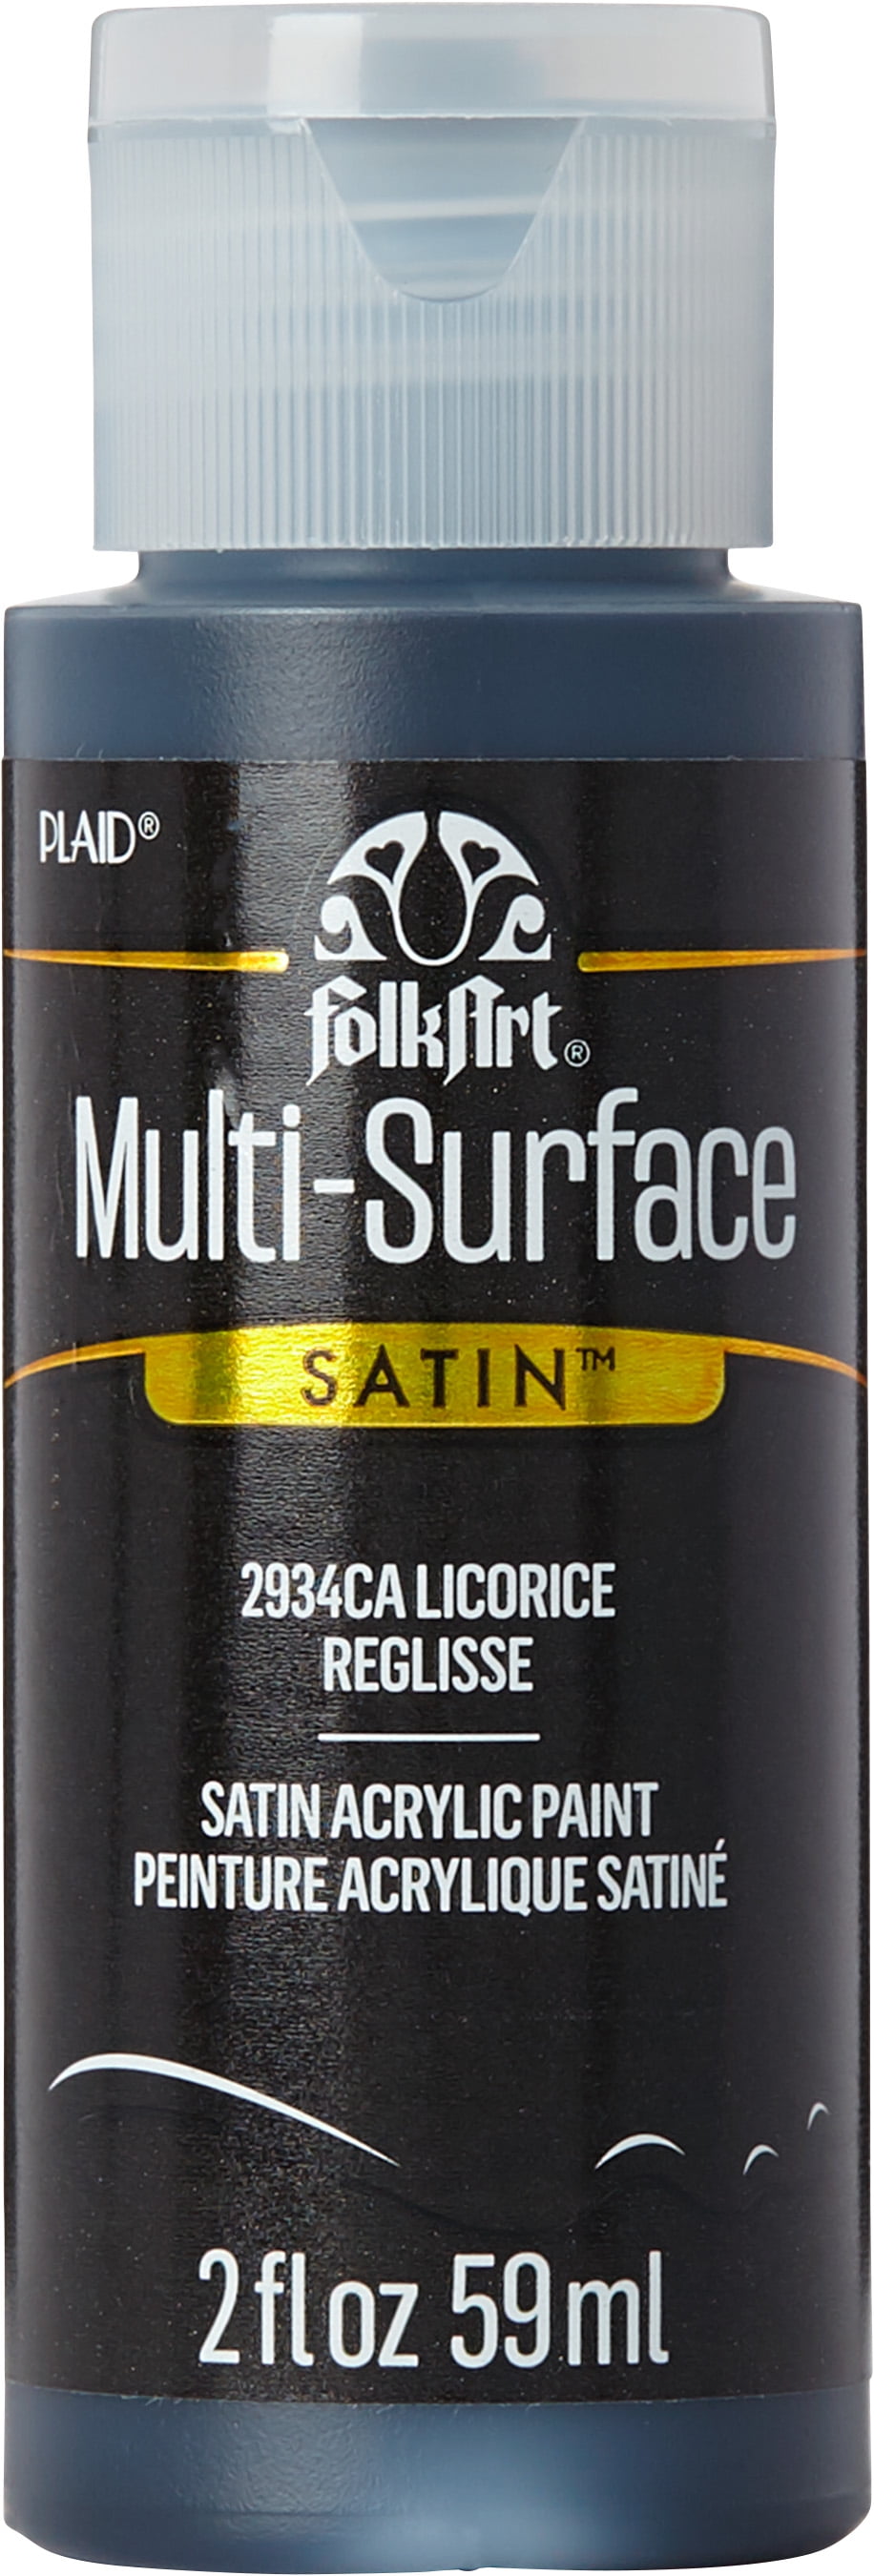 Shop Plaid FolkArt ® Multi-Surface Satin Acrylic Paints - Berry Wine, 2 oz.  - 2941 - 2941